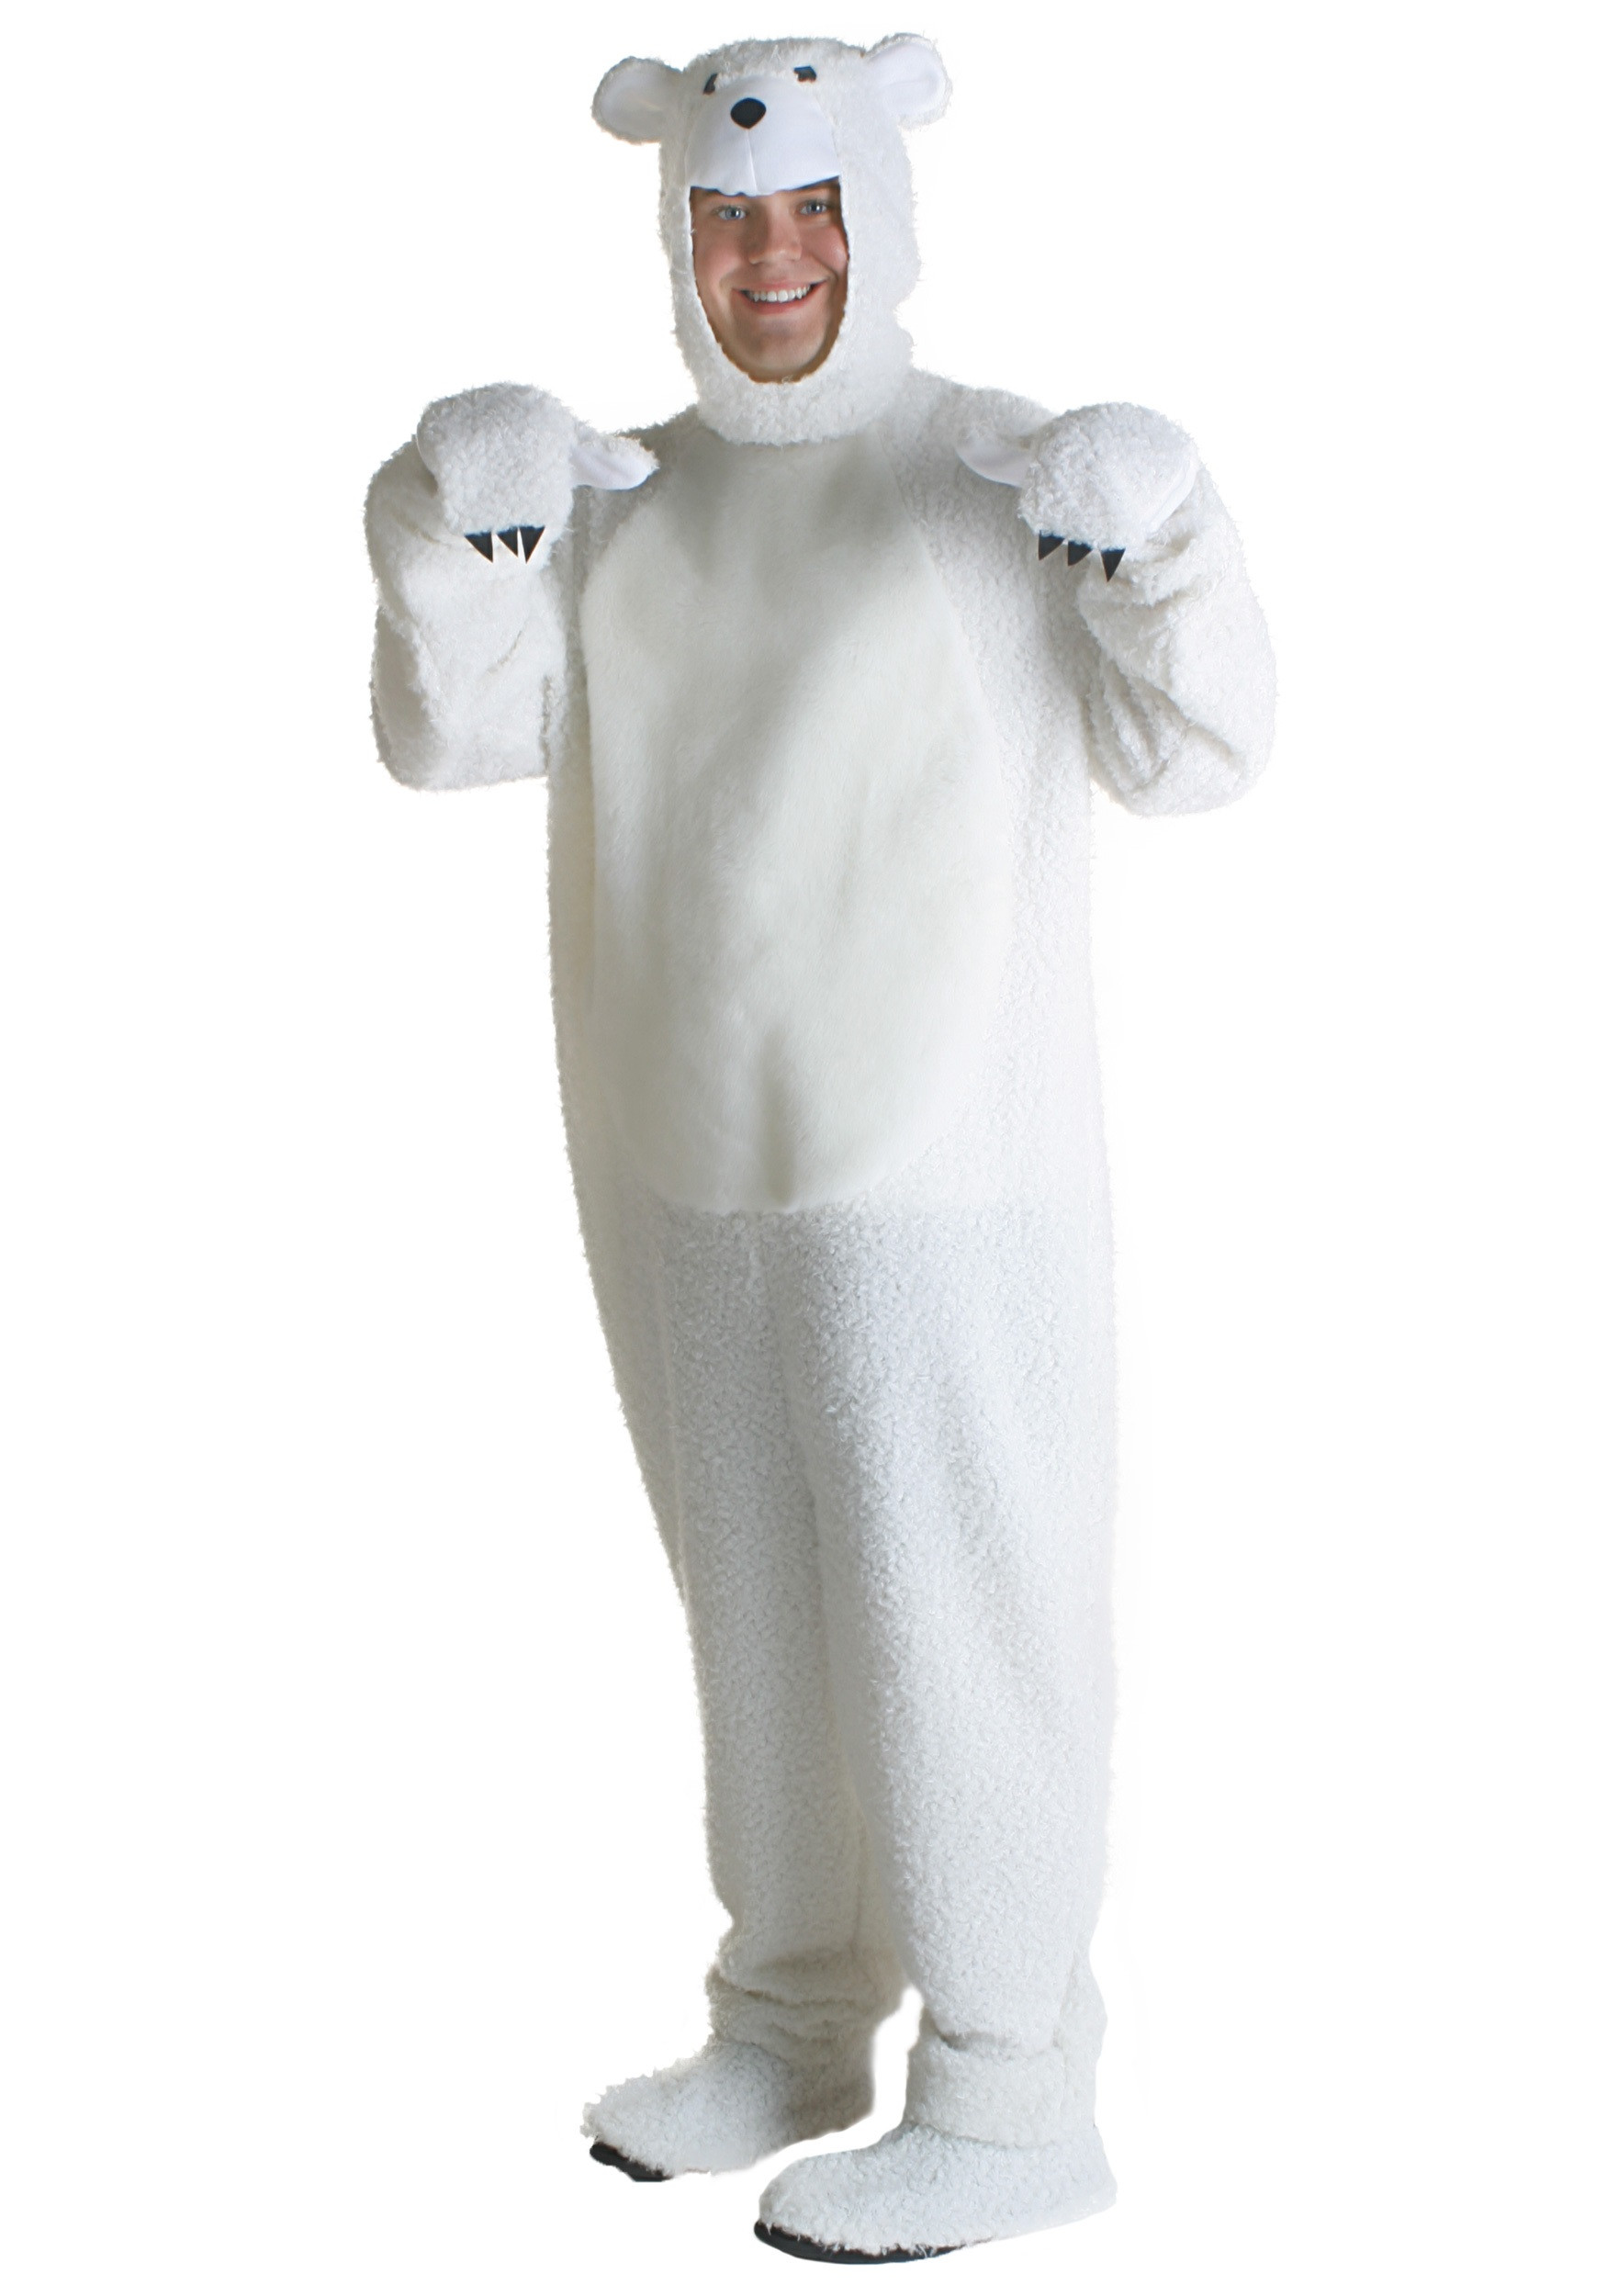 Polar Bear Costume DIY
 Adult Polar Bear Costume